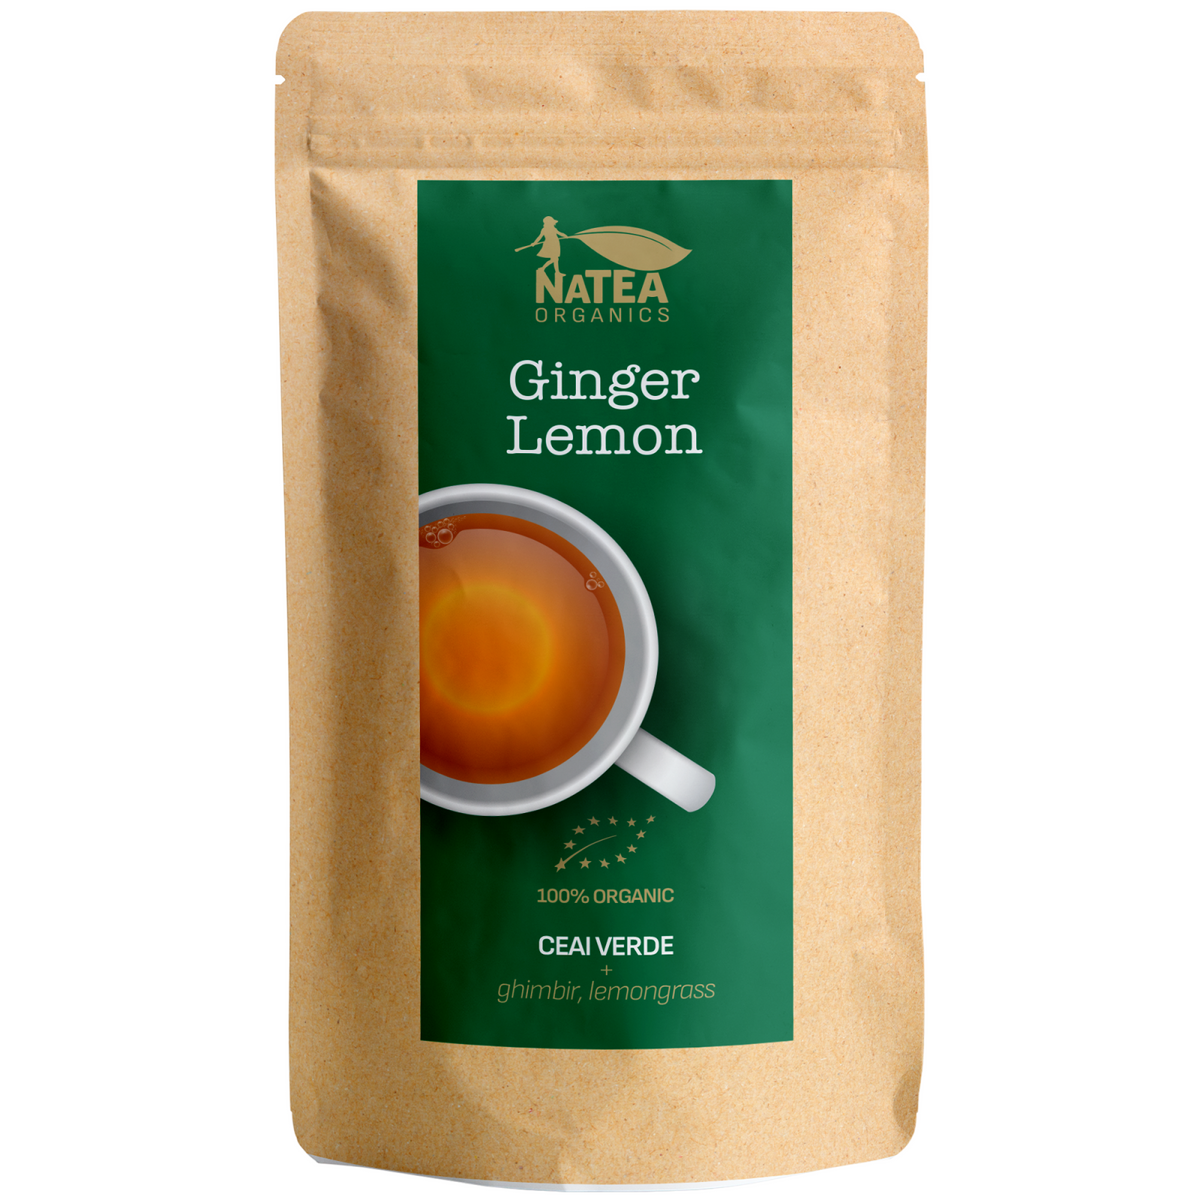 Ceai verde cu ghimbir, lemongrass si lamaie - Ginger Lemon